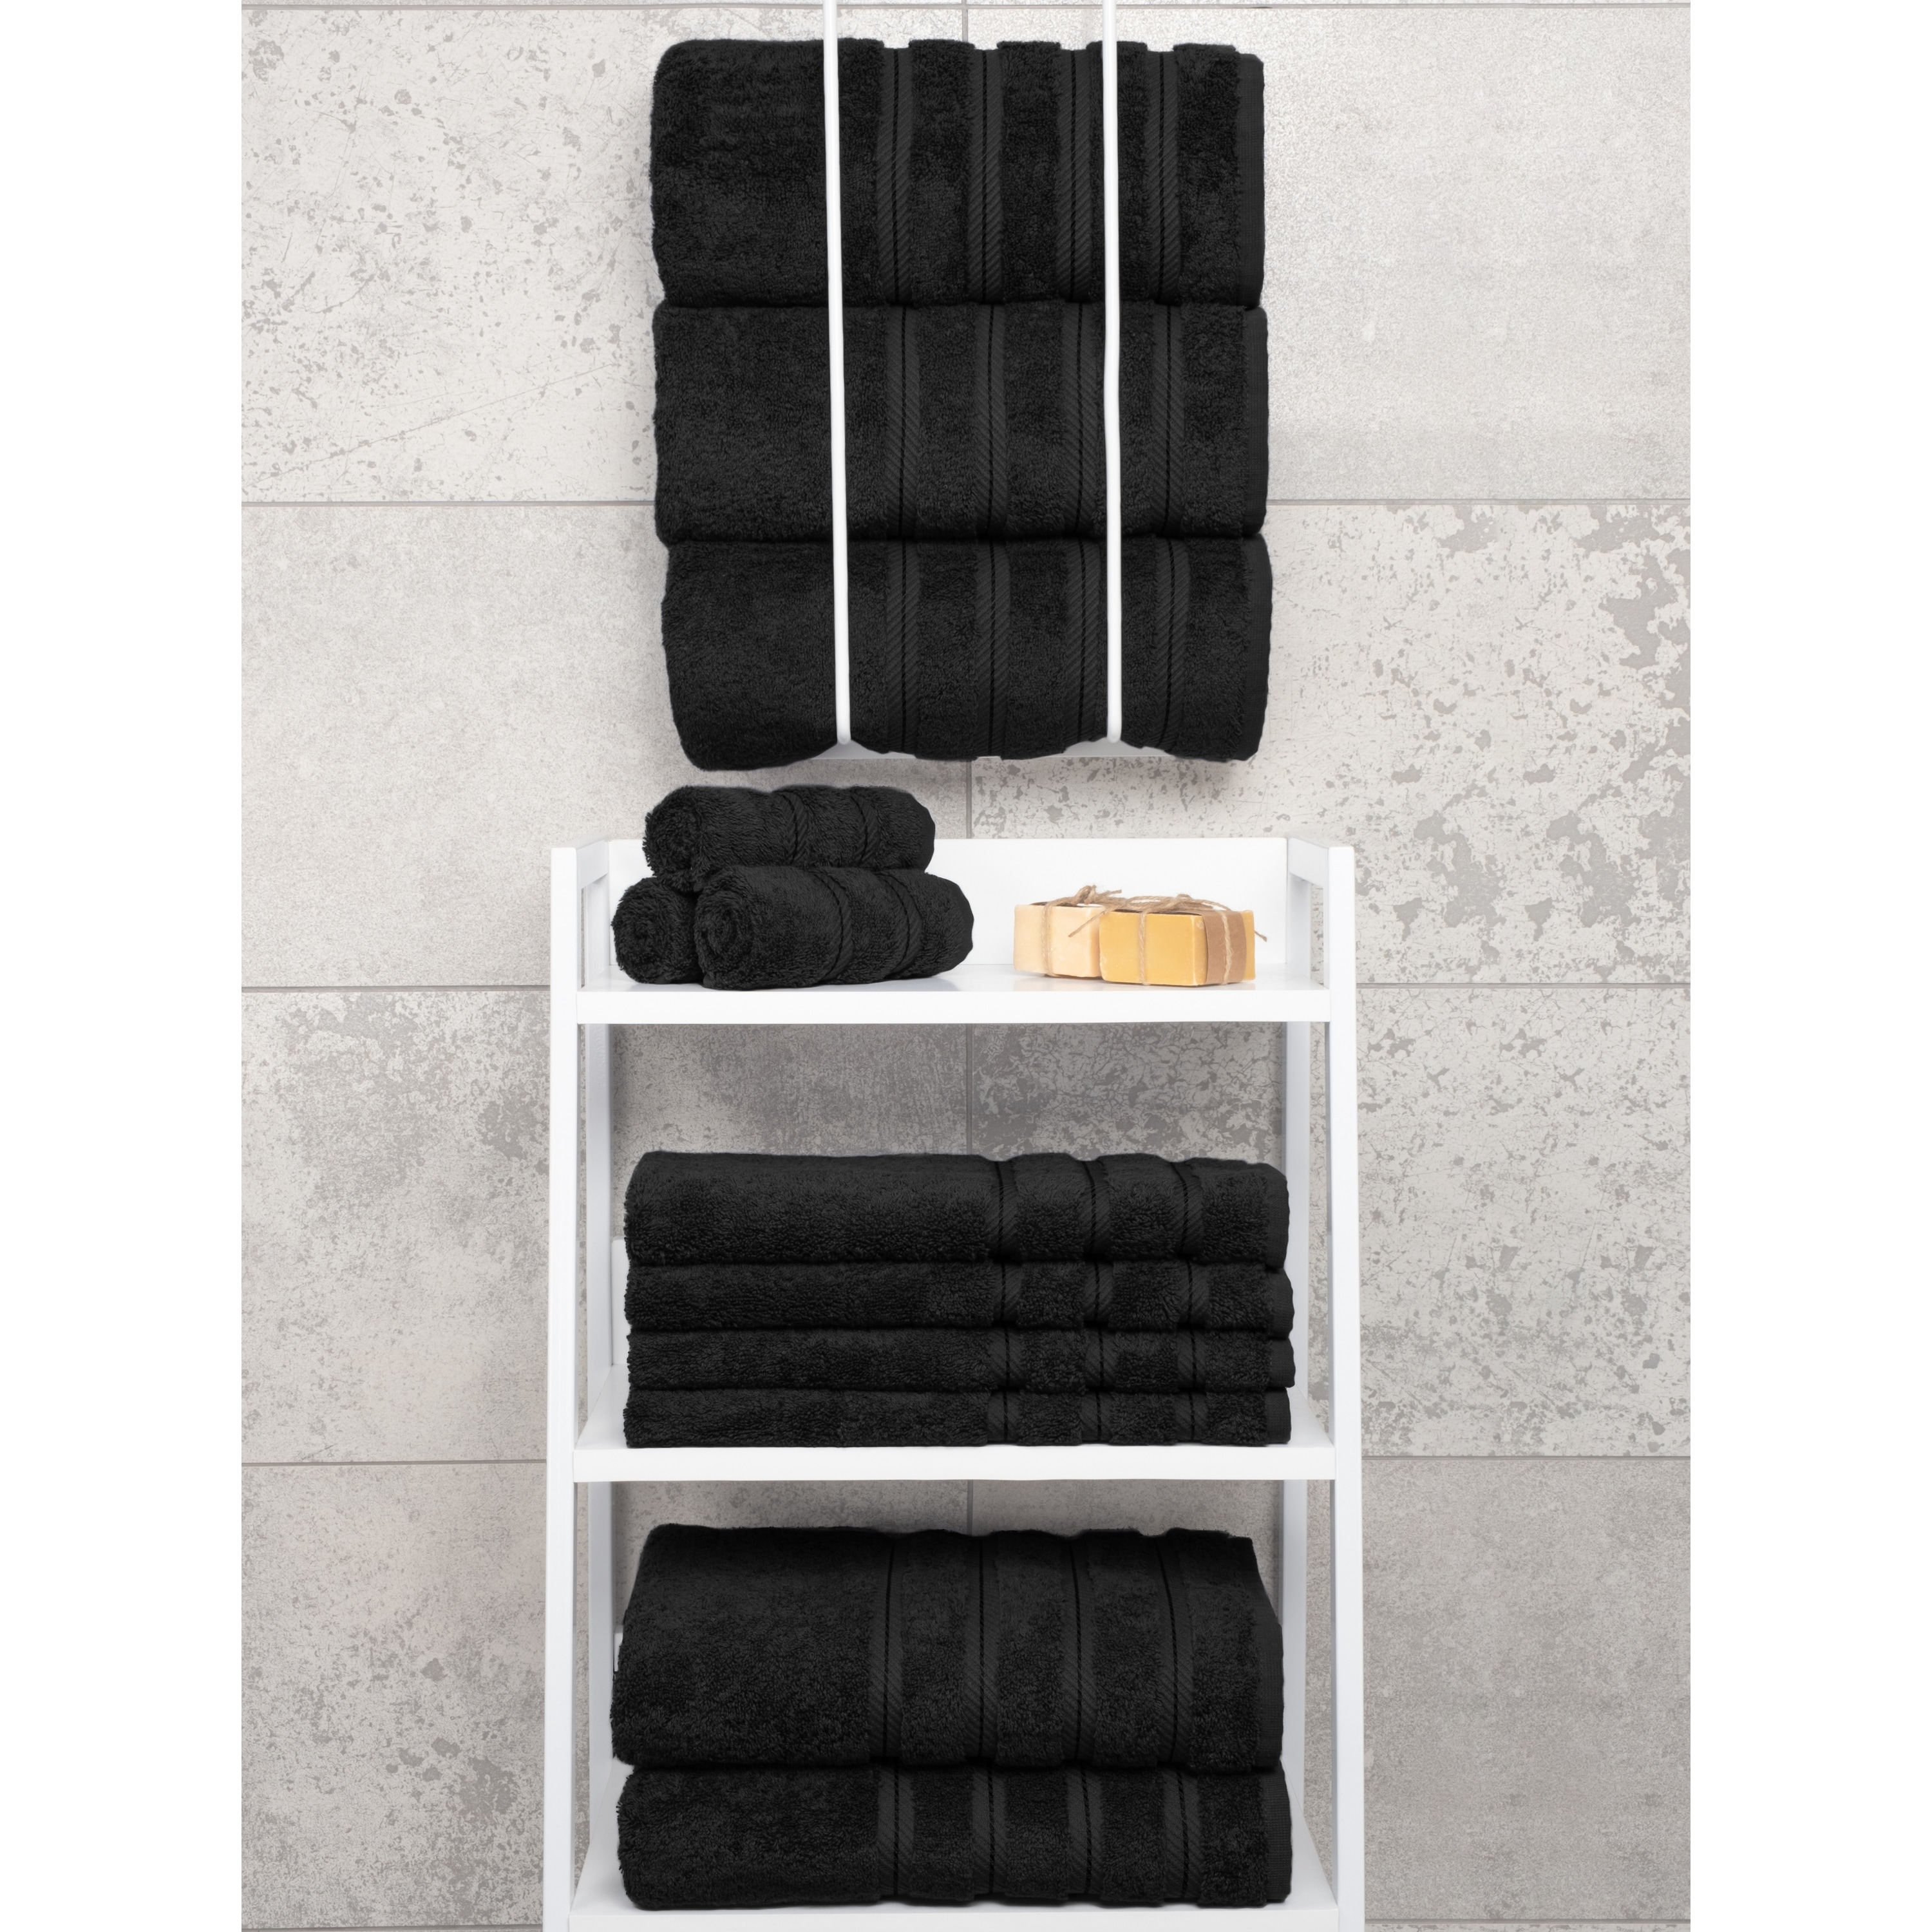  American Soft Linen 4 Piece Bath Towel Set, 100